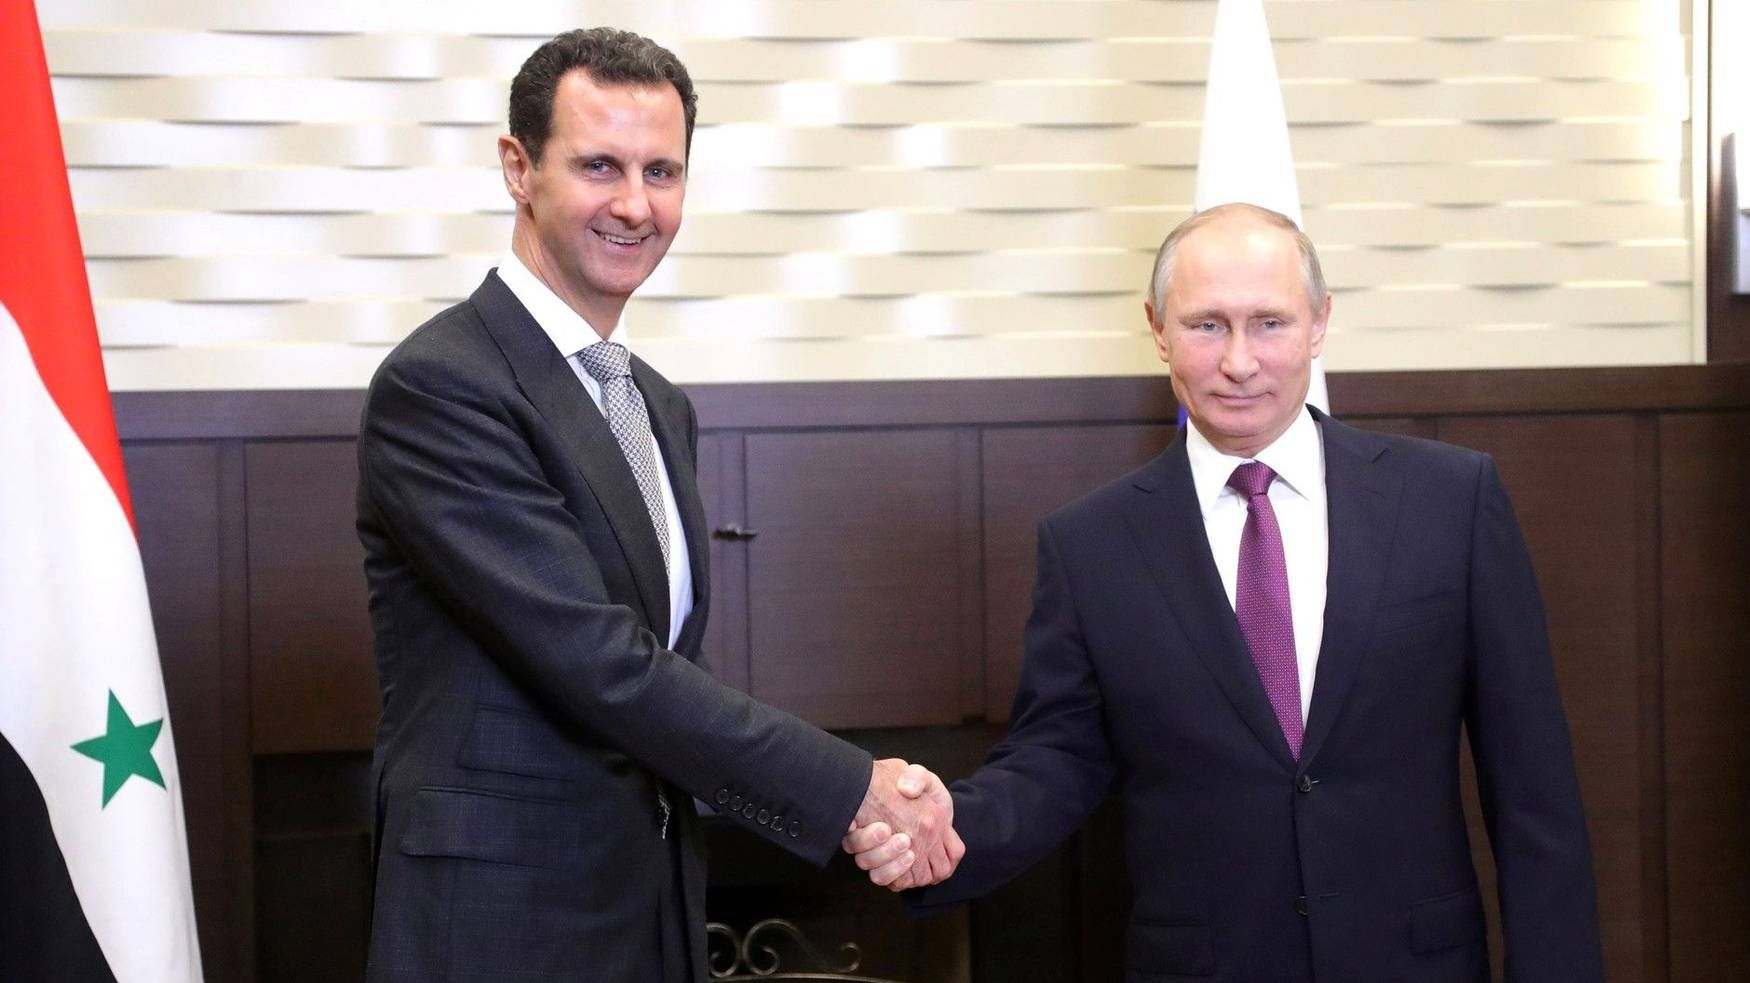 Президент Сирии Башар Асад посетил Россию с рабочим визитом